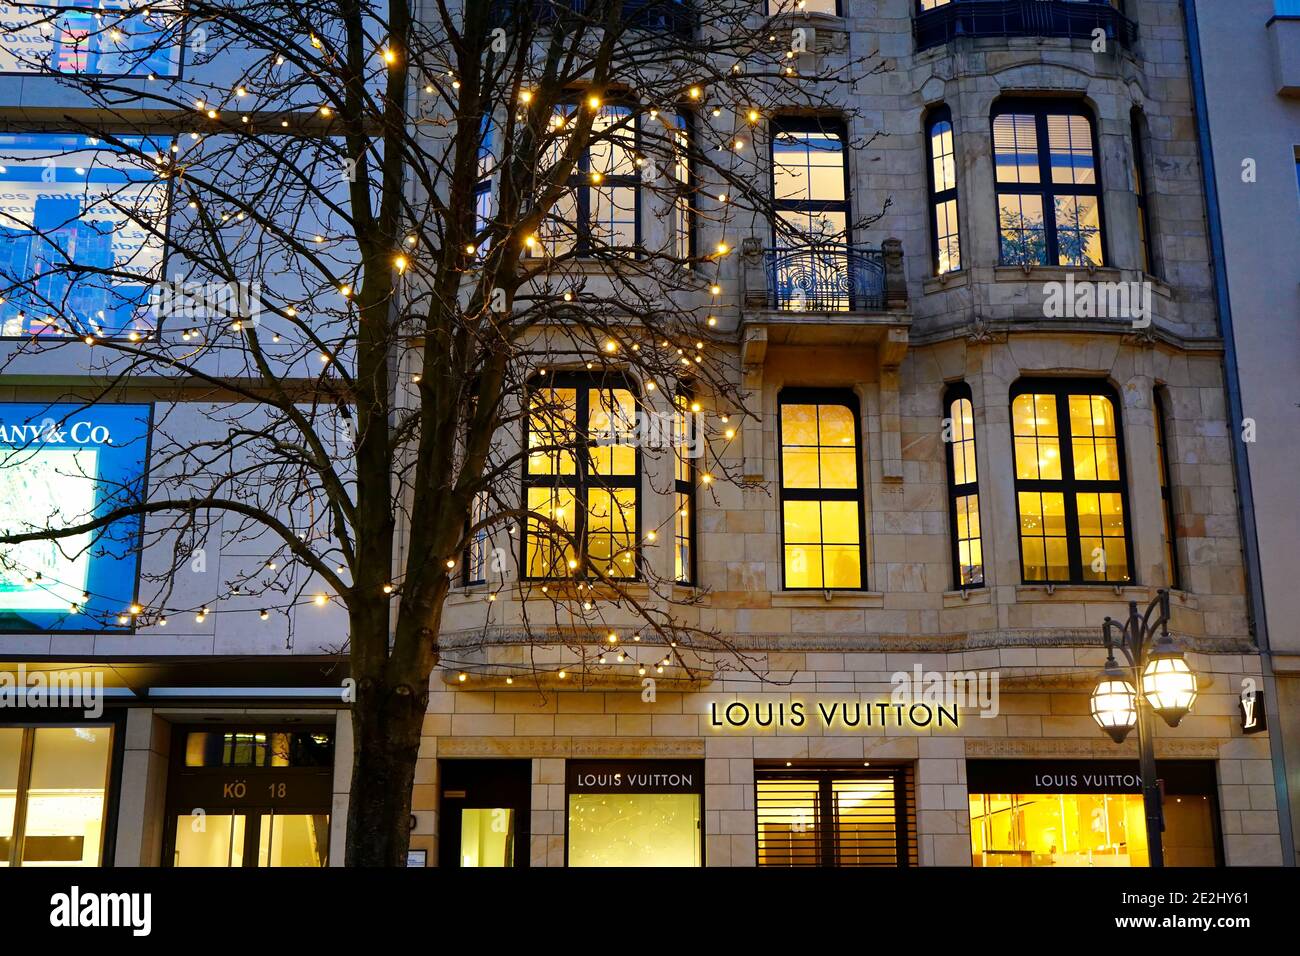 Louis vuitton shop sign window vienna austria hi-res stock